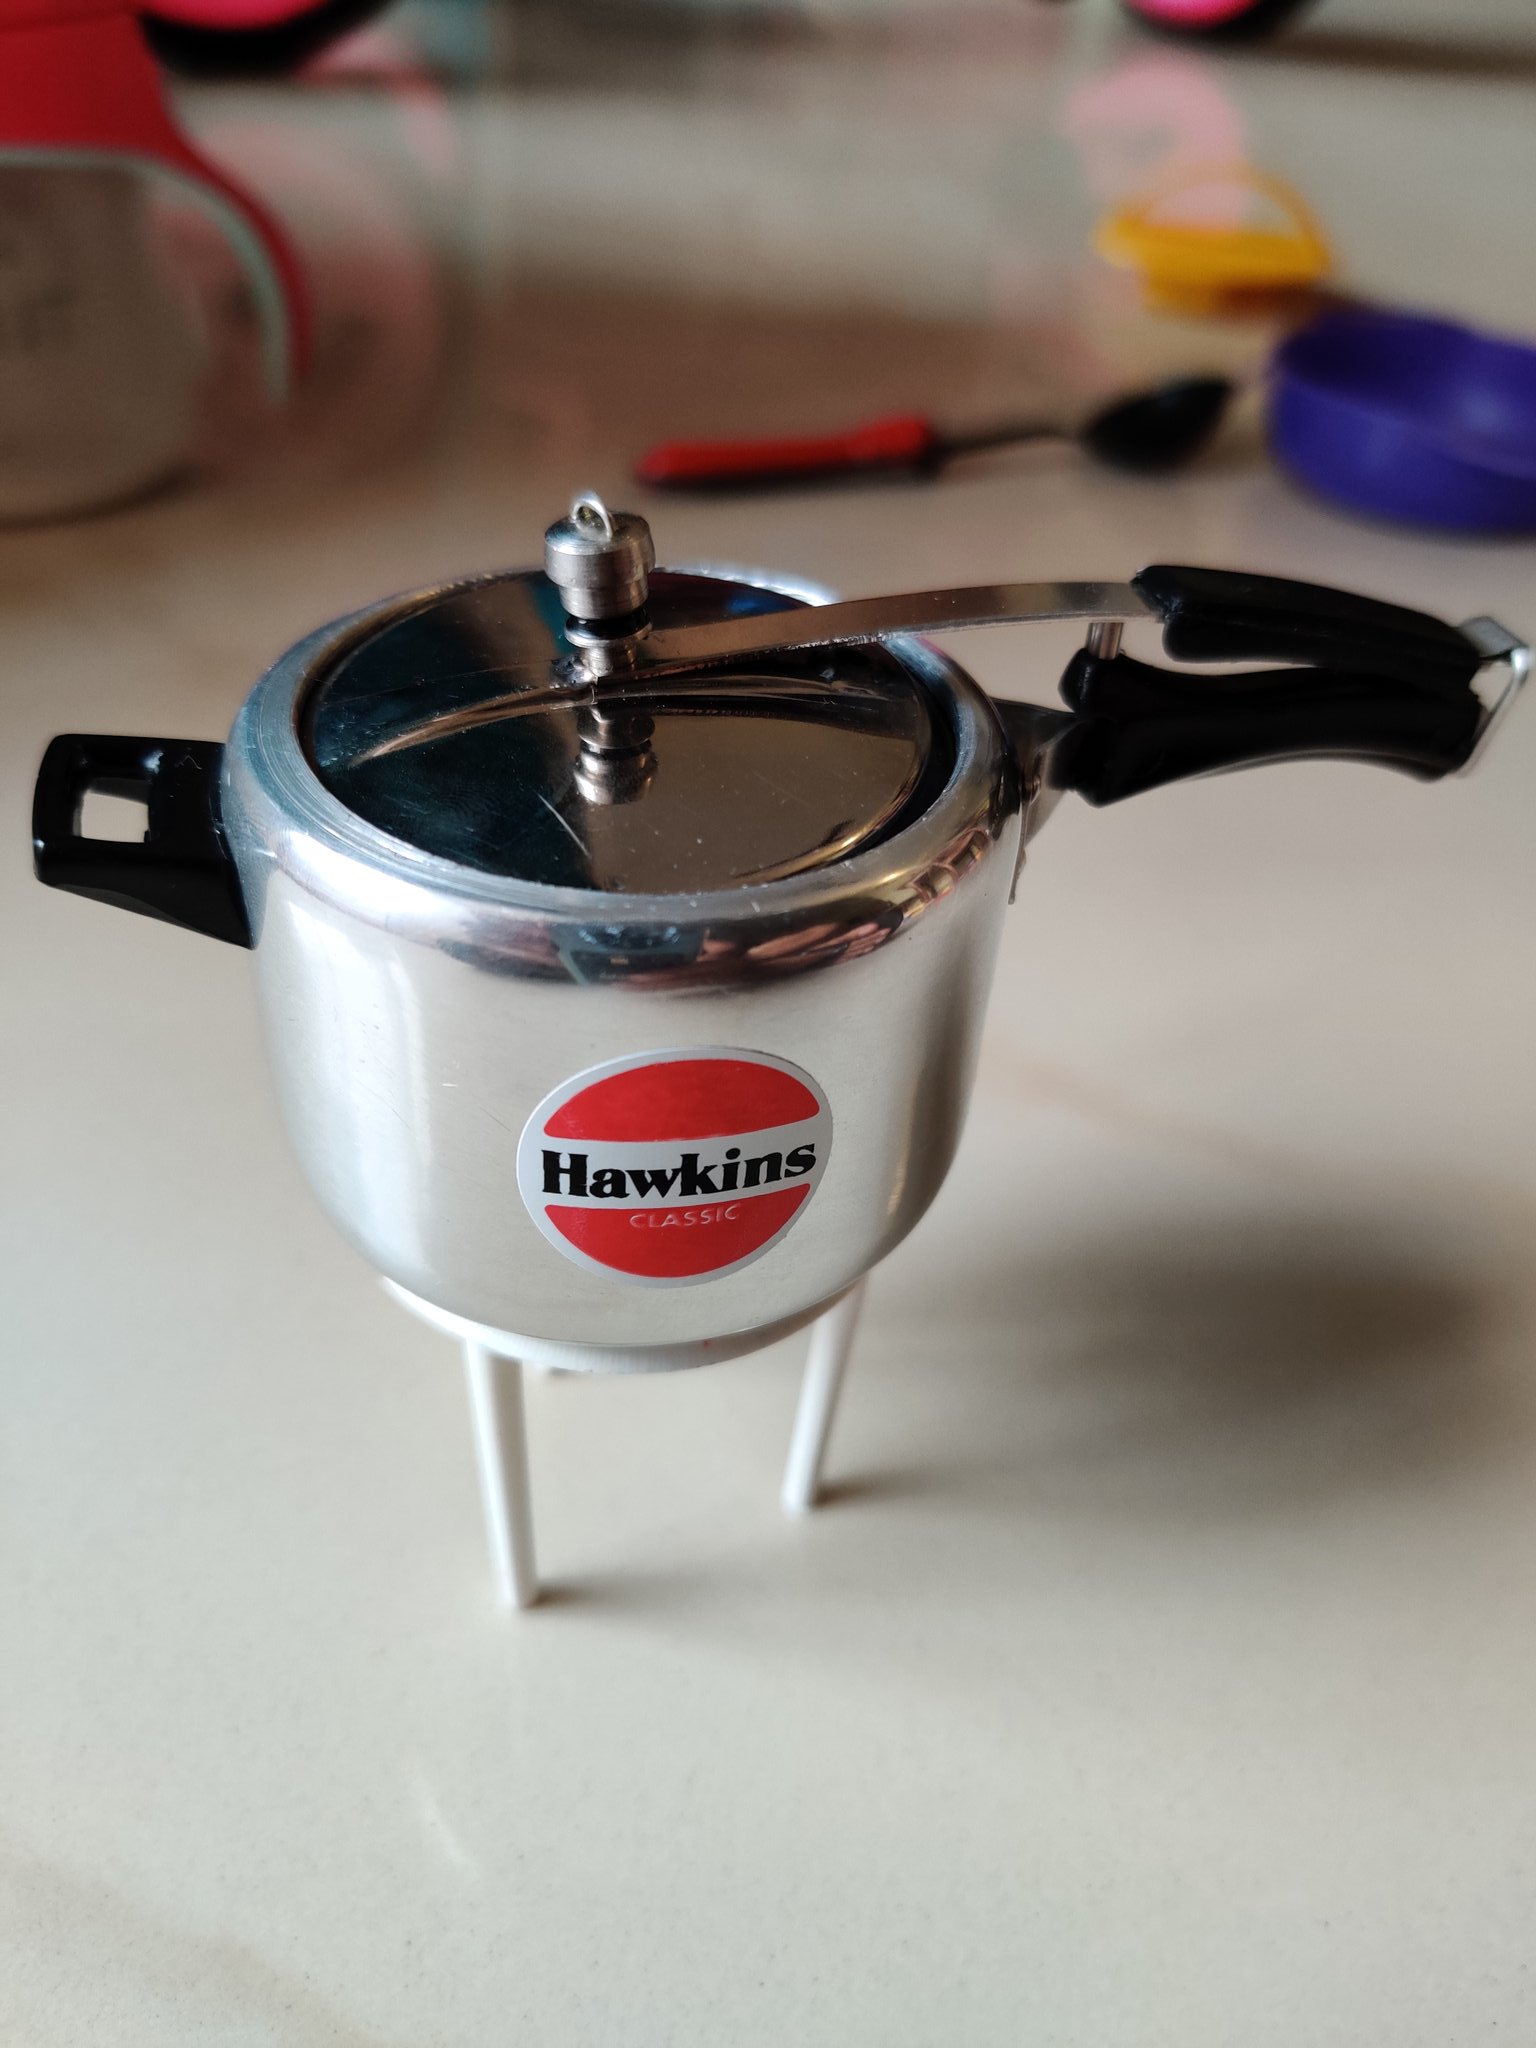 Hawkins Mini Pressure Cooker for Baby Editorial Stock Image